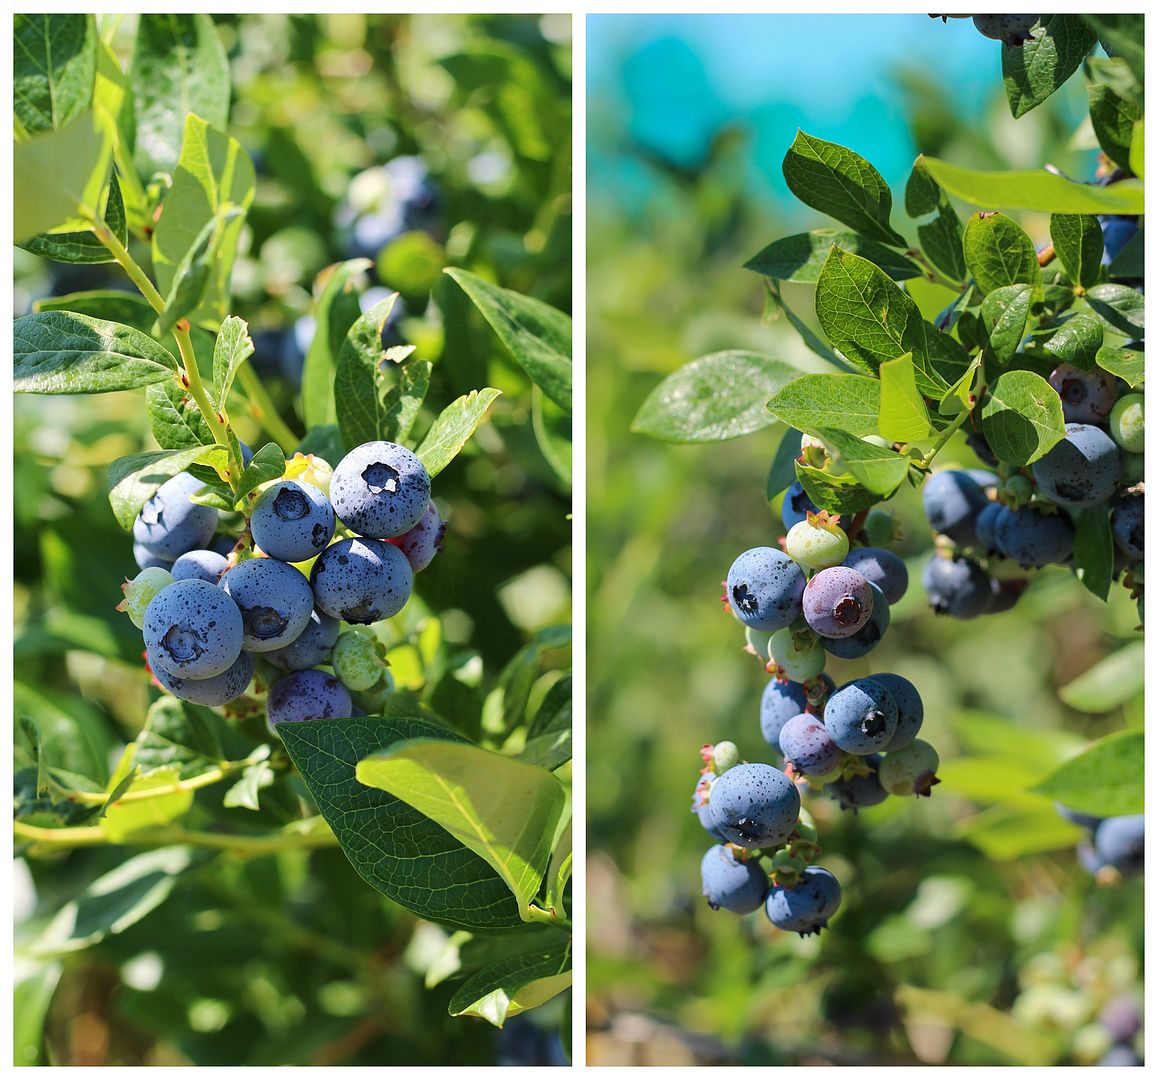 Blueberry picking in Ontario